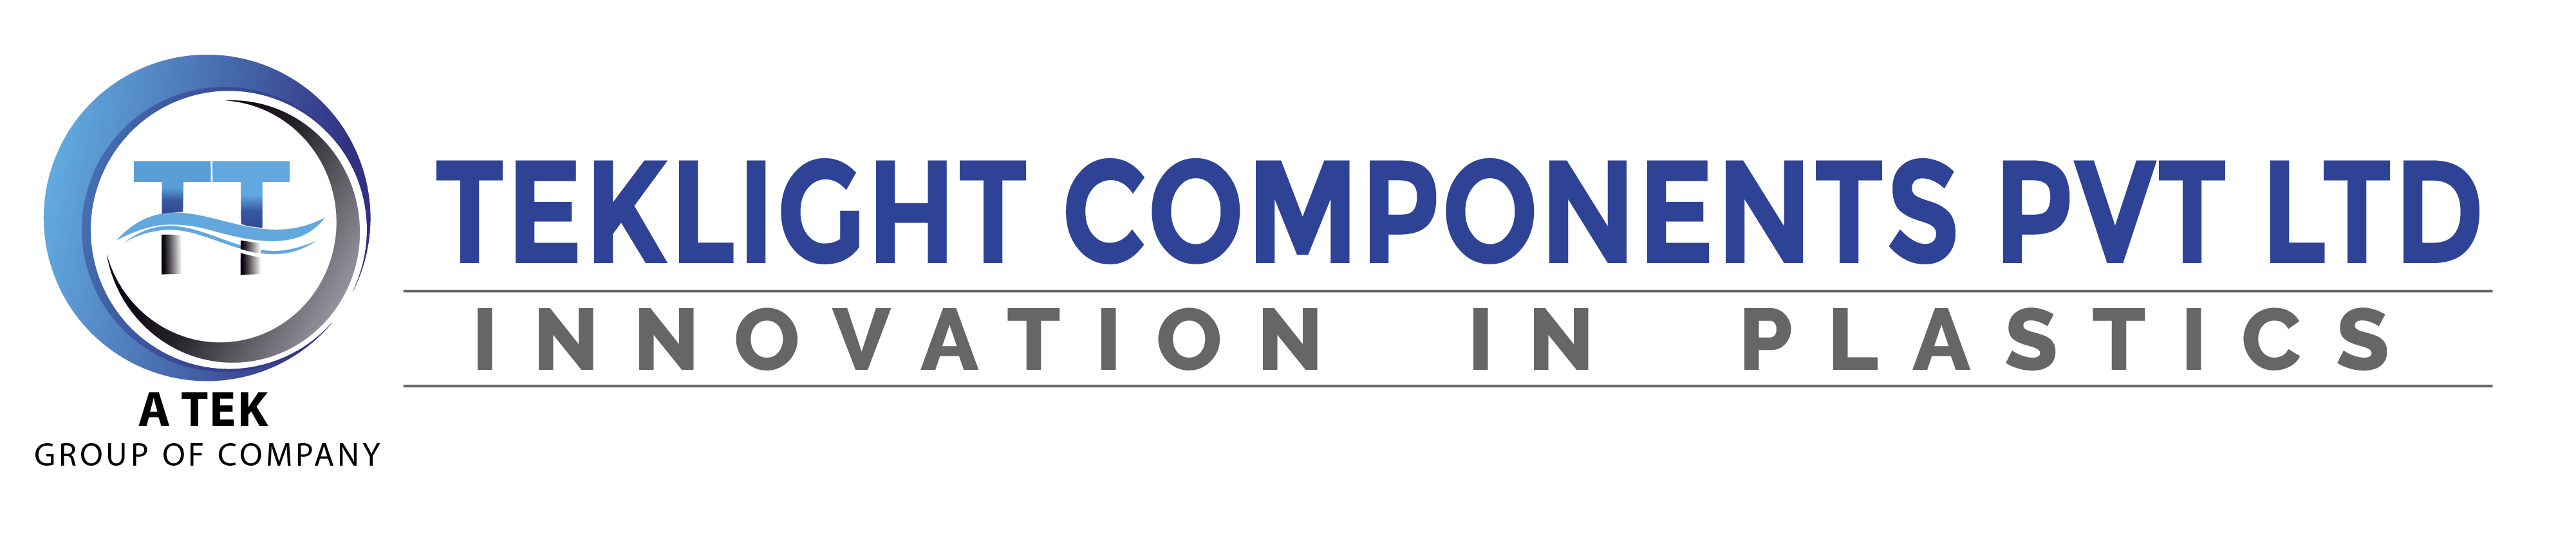 Teklight Components Pvt Ltd